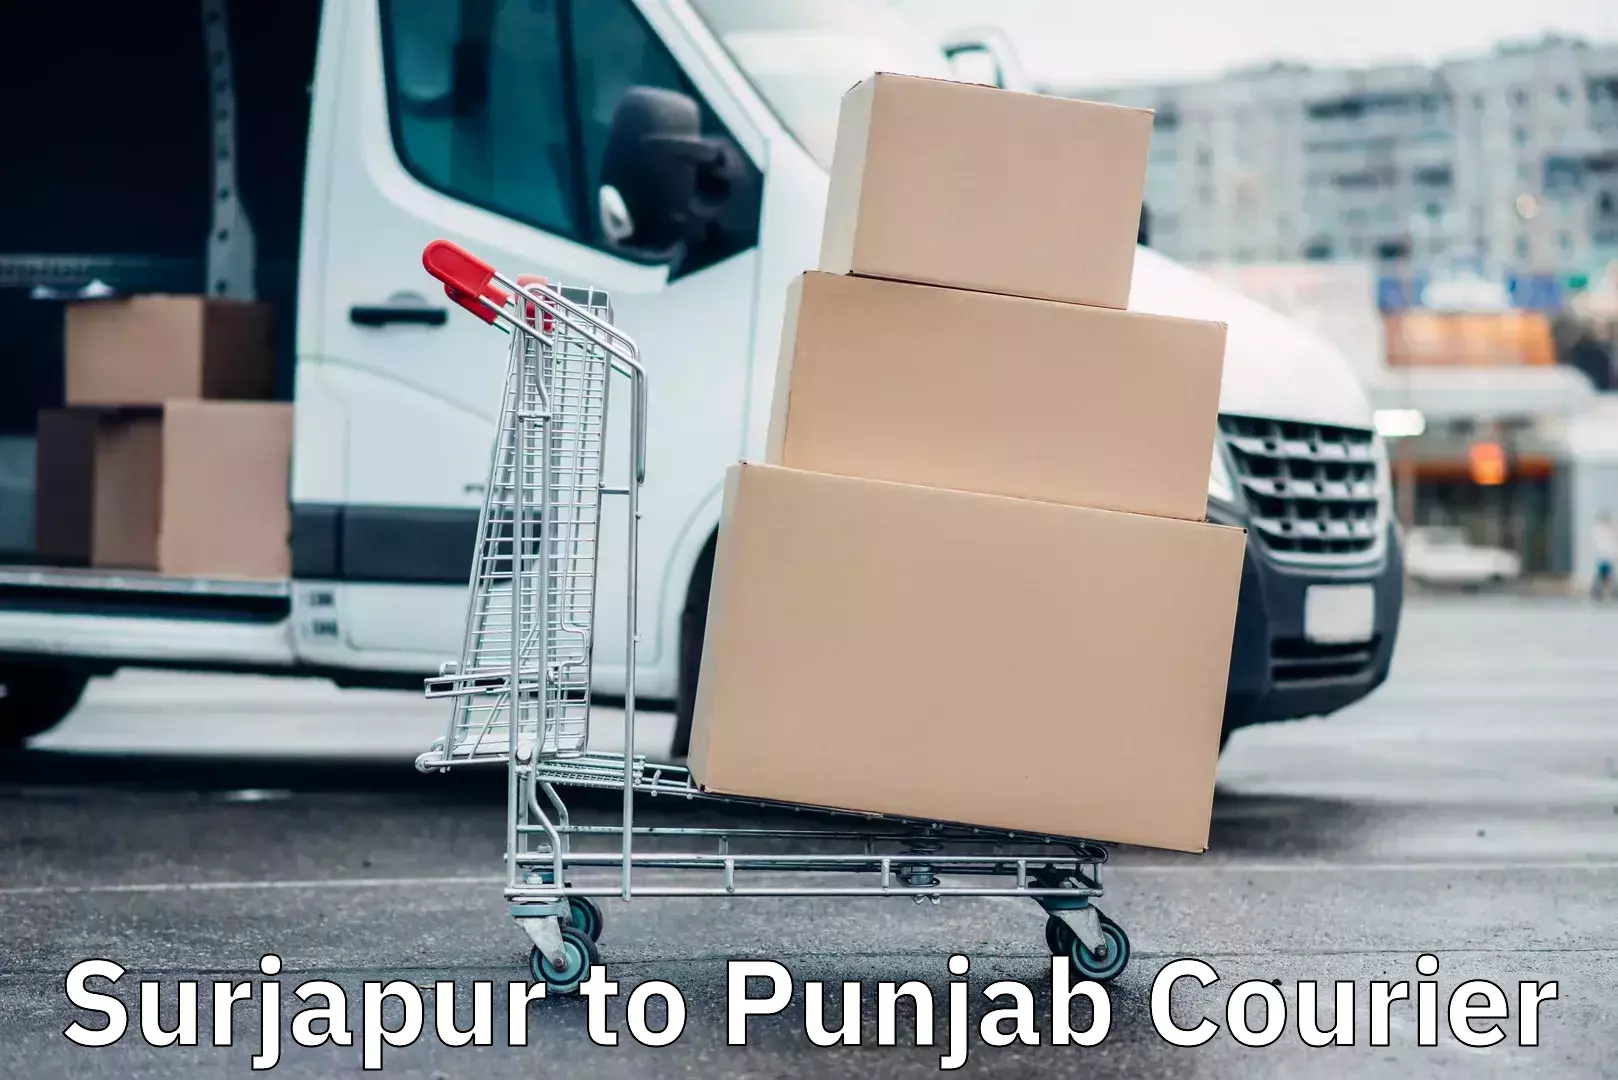 Courier service efficiency Surjapur to Punjab